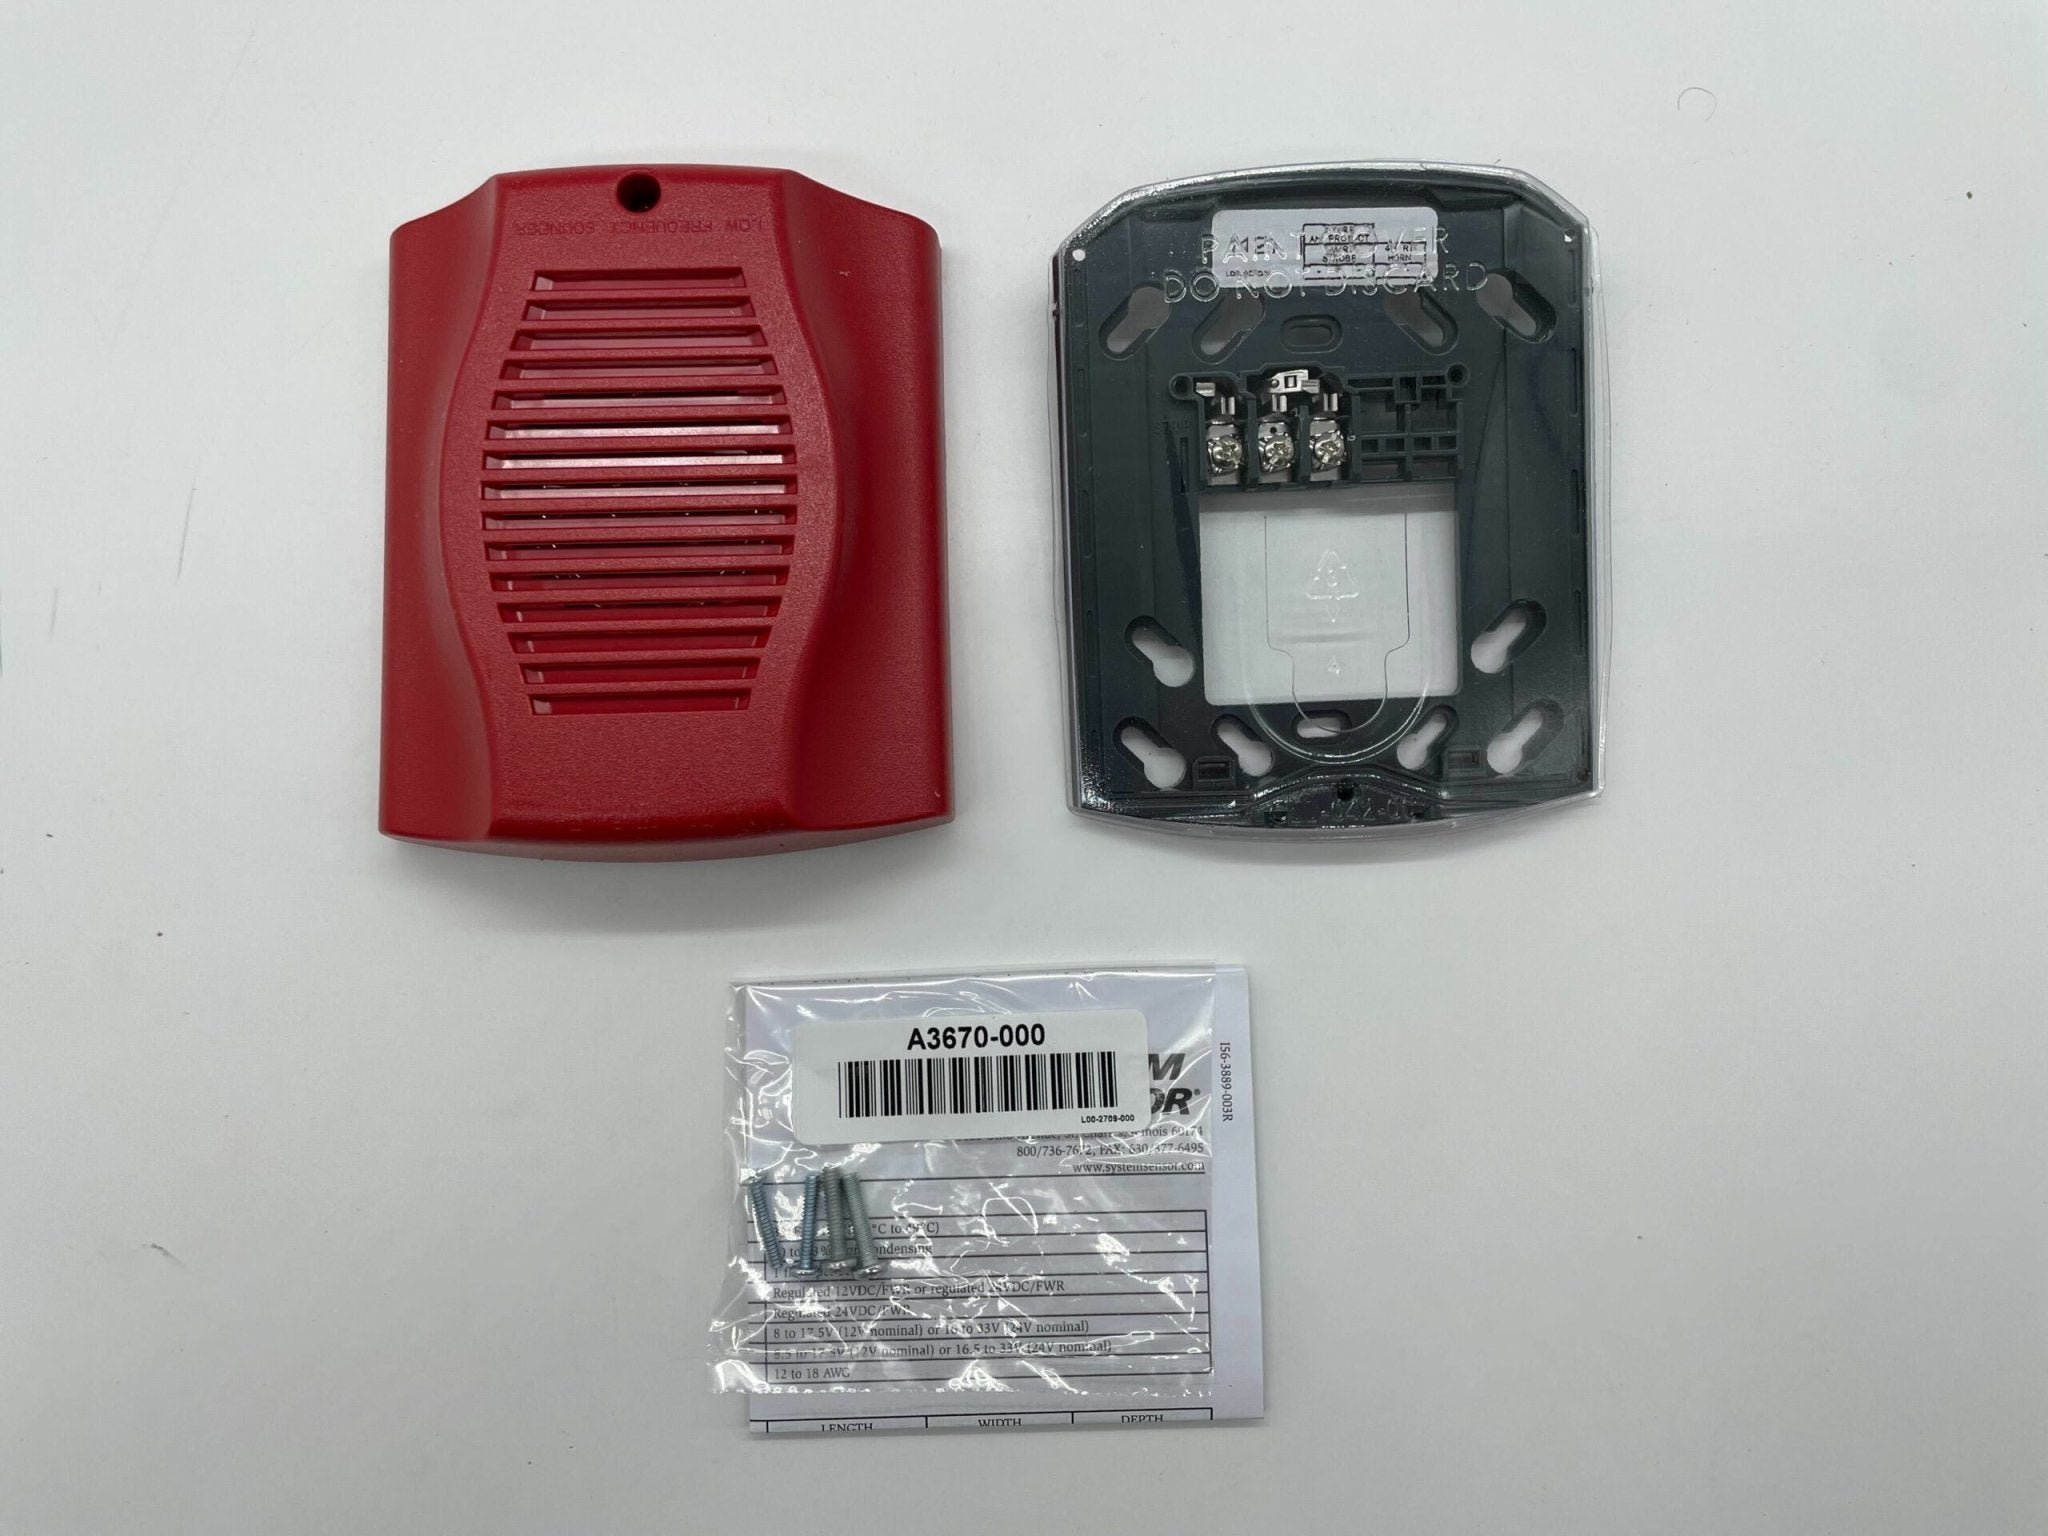 System Sensor HR-LF - The Fire Alarm Supplier